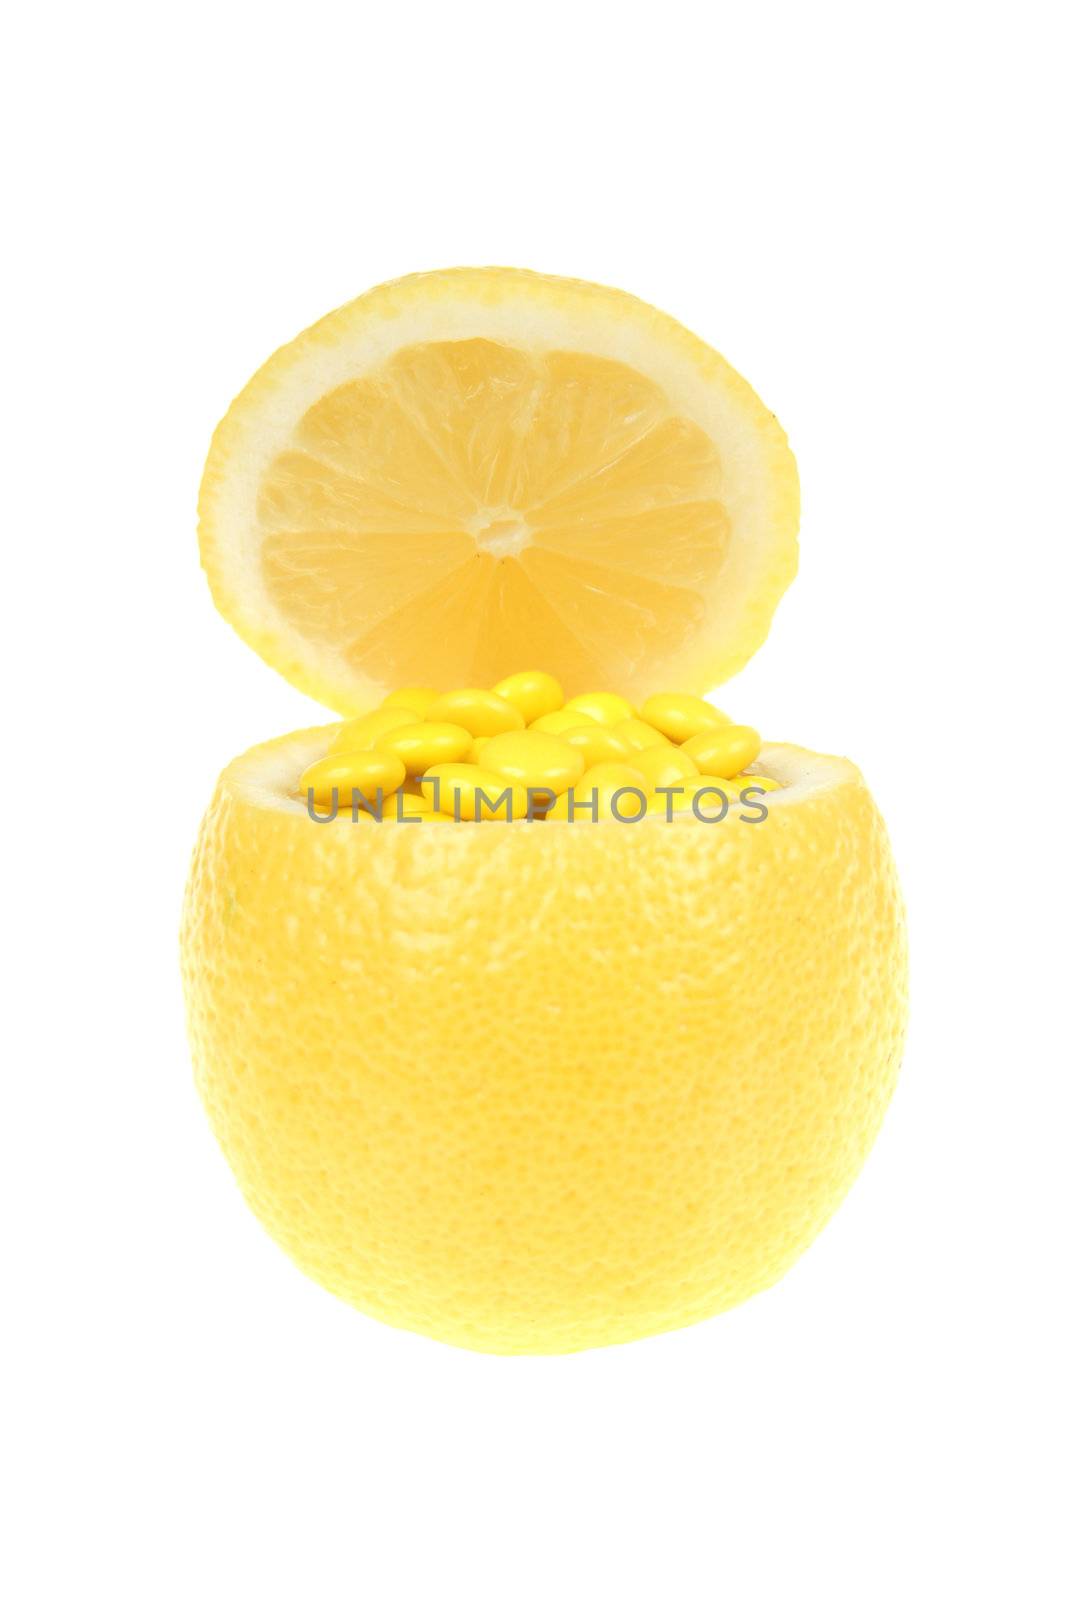 Lemon and vitamin by pixelman